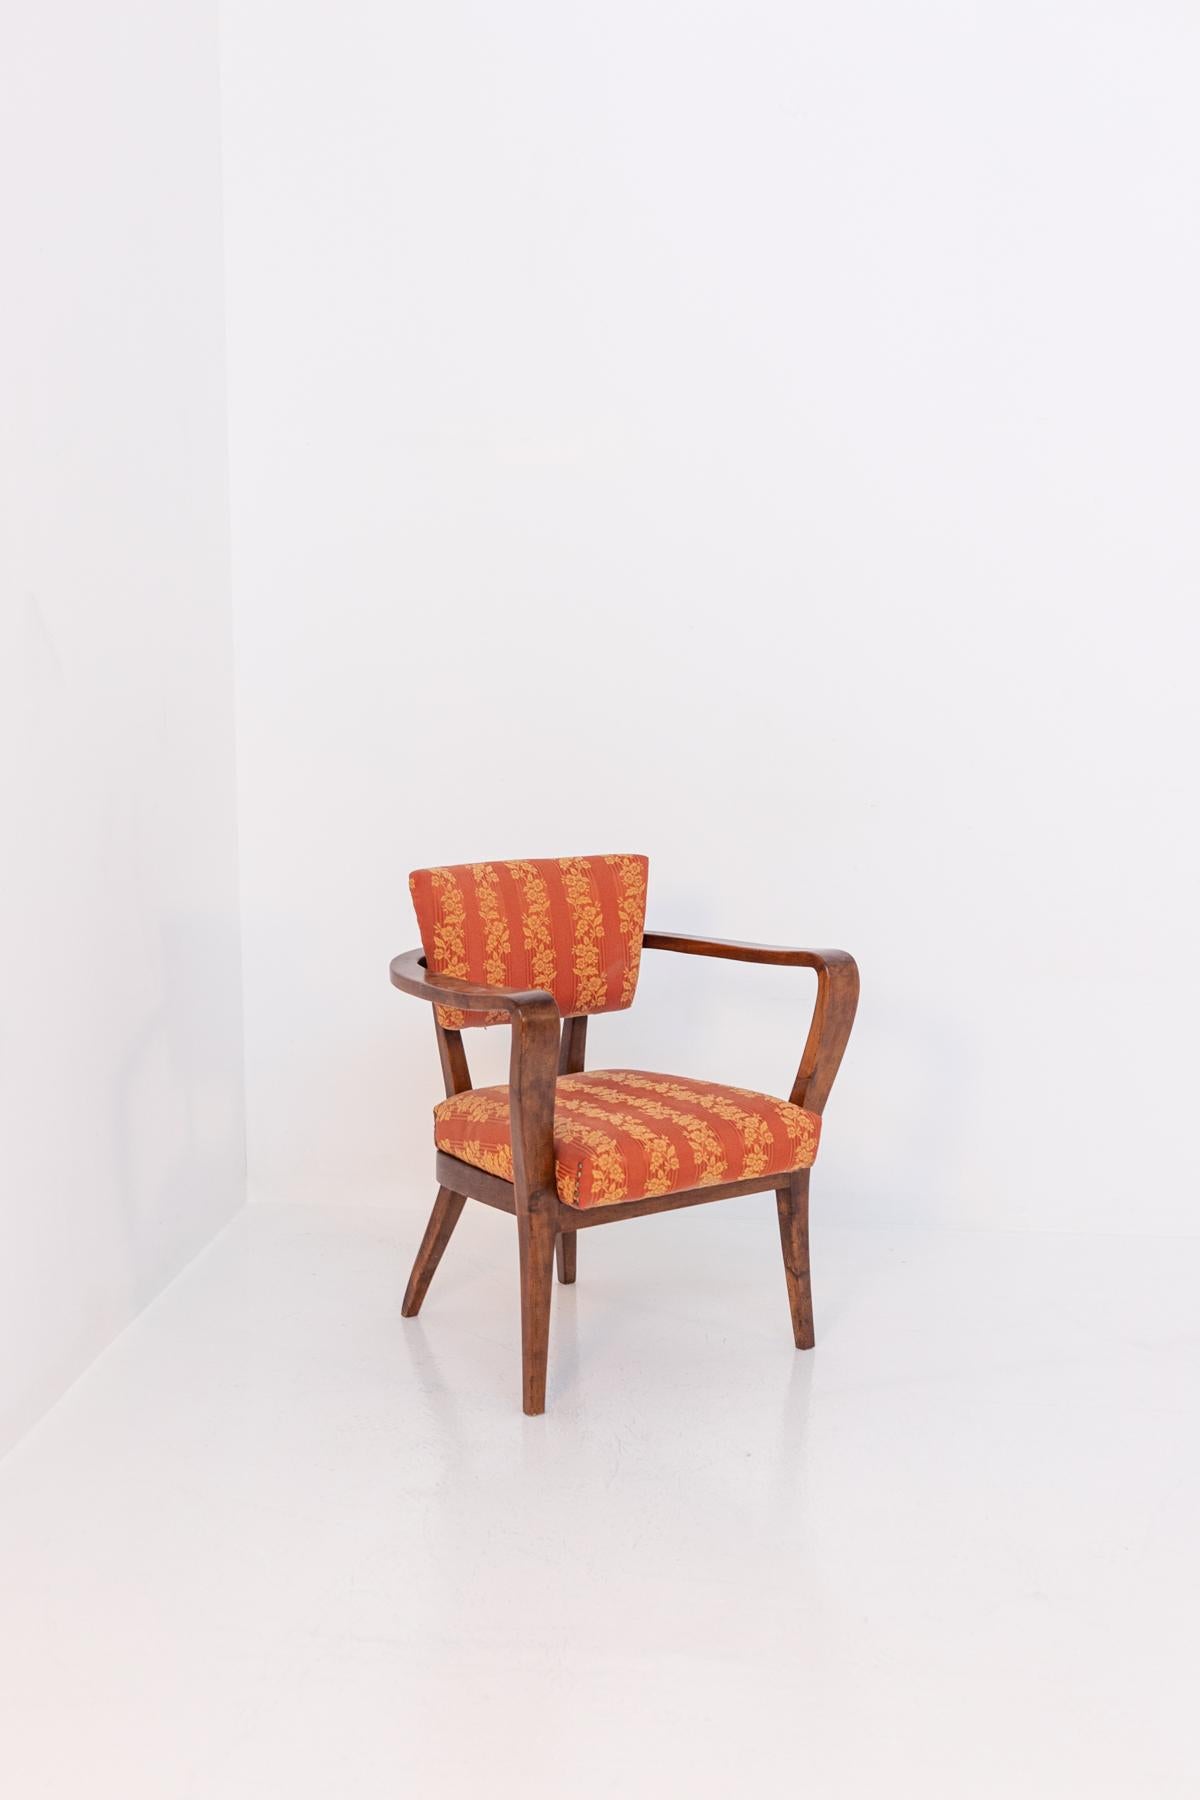 Italian Chair designed by Gio Ponti for Gastone Rinaldi, Published 4